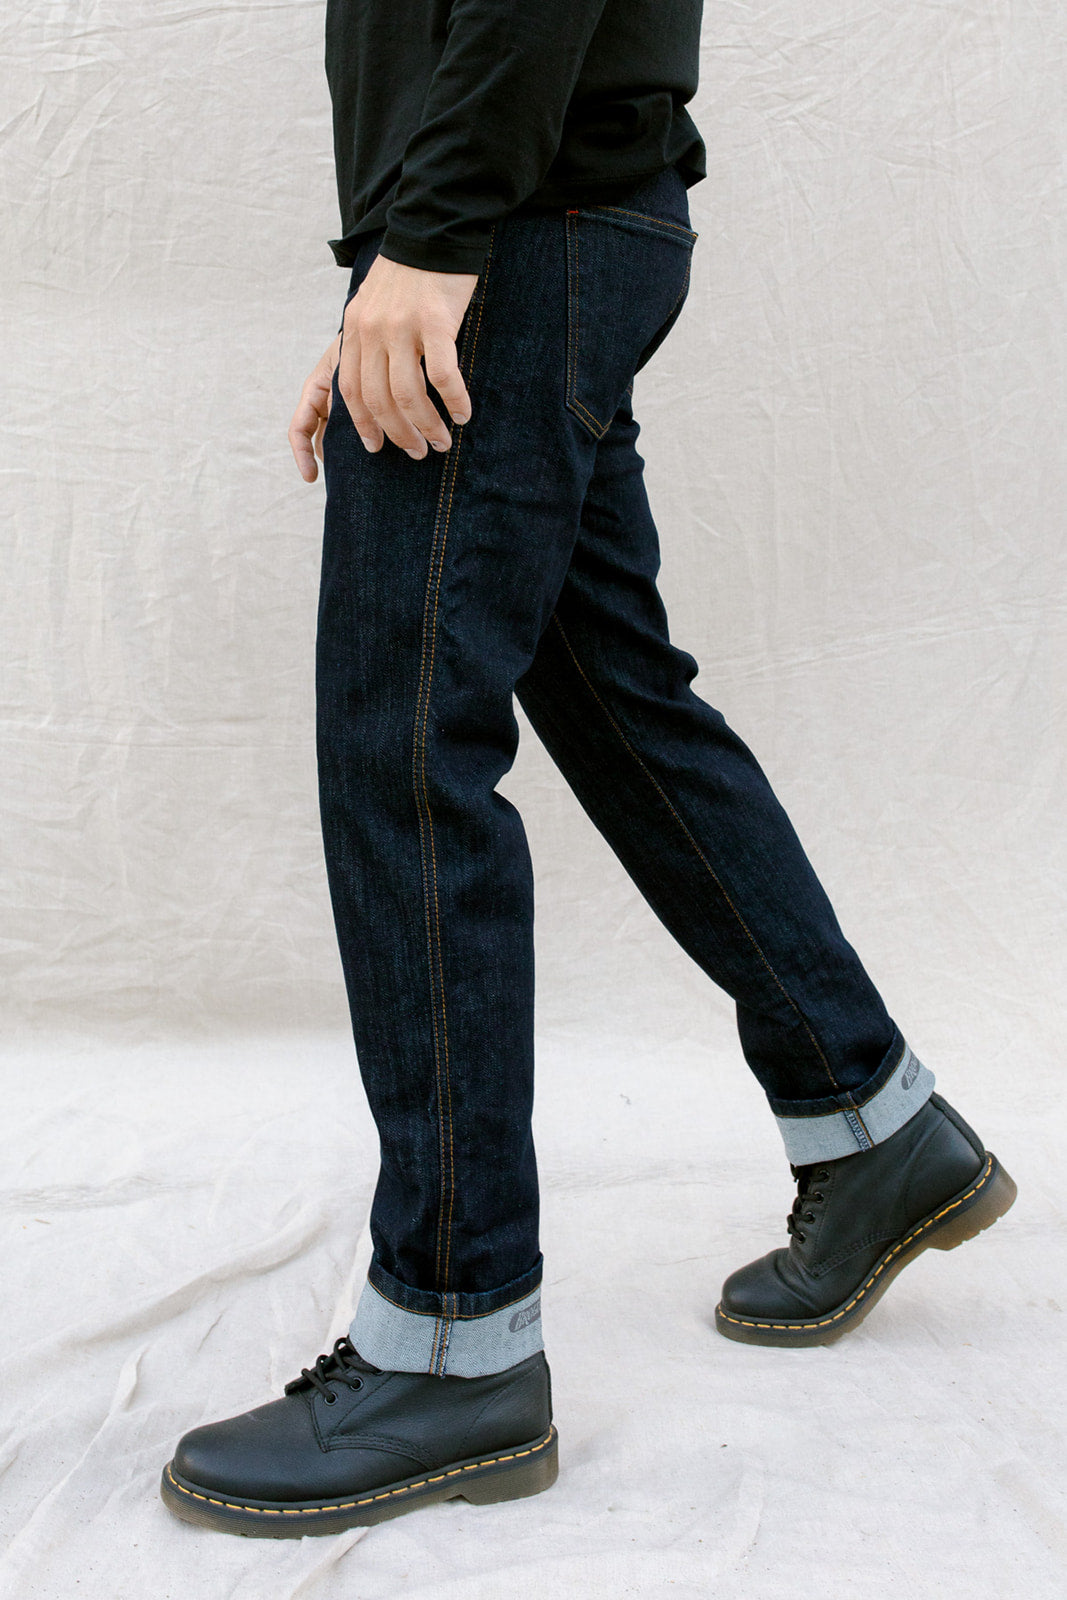 California Raw Navy Jeans - Slim Fit